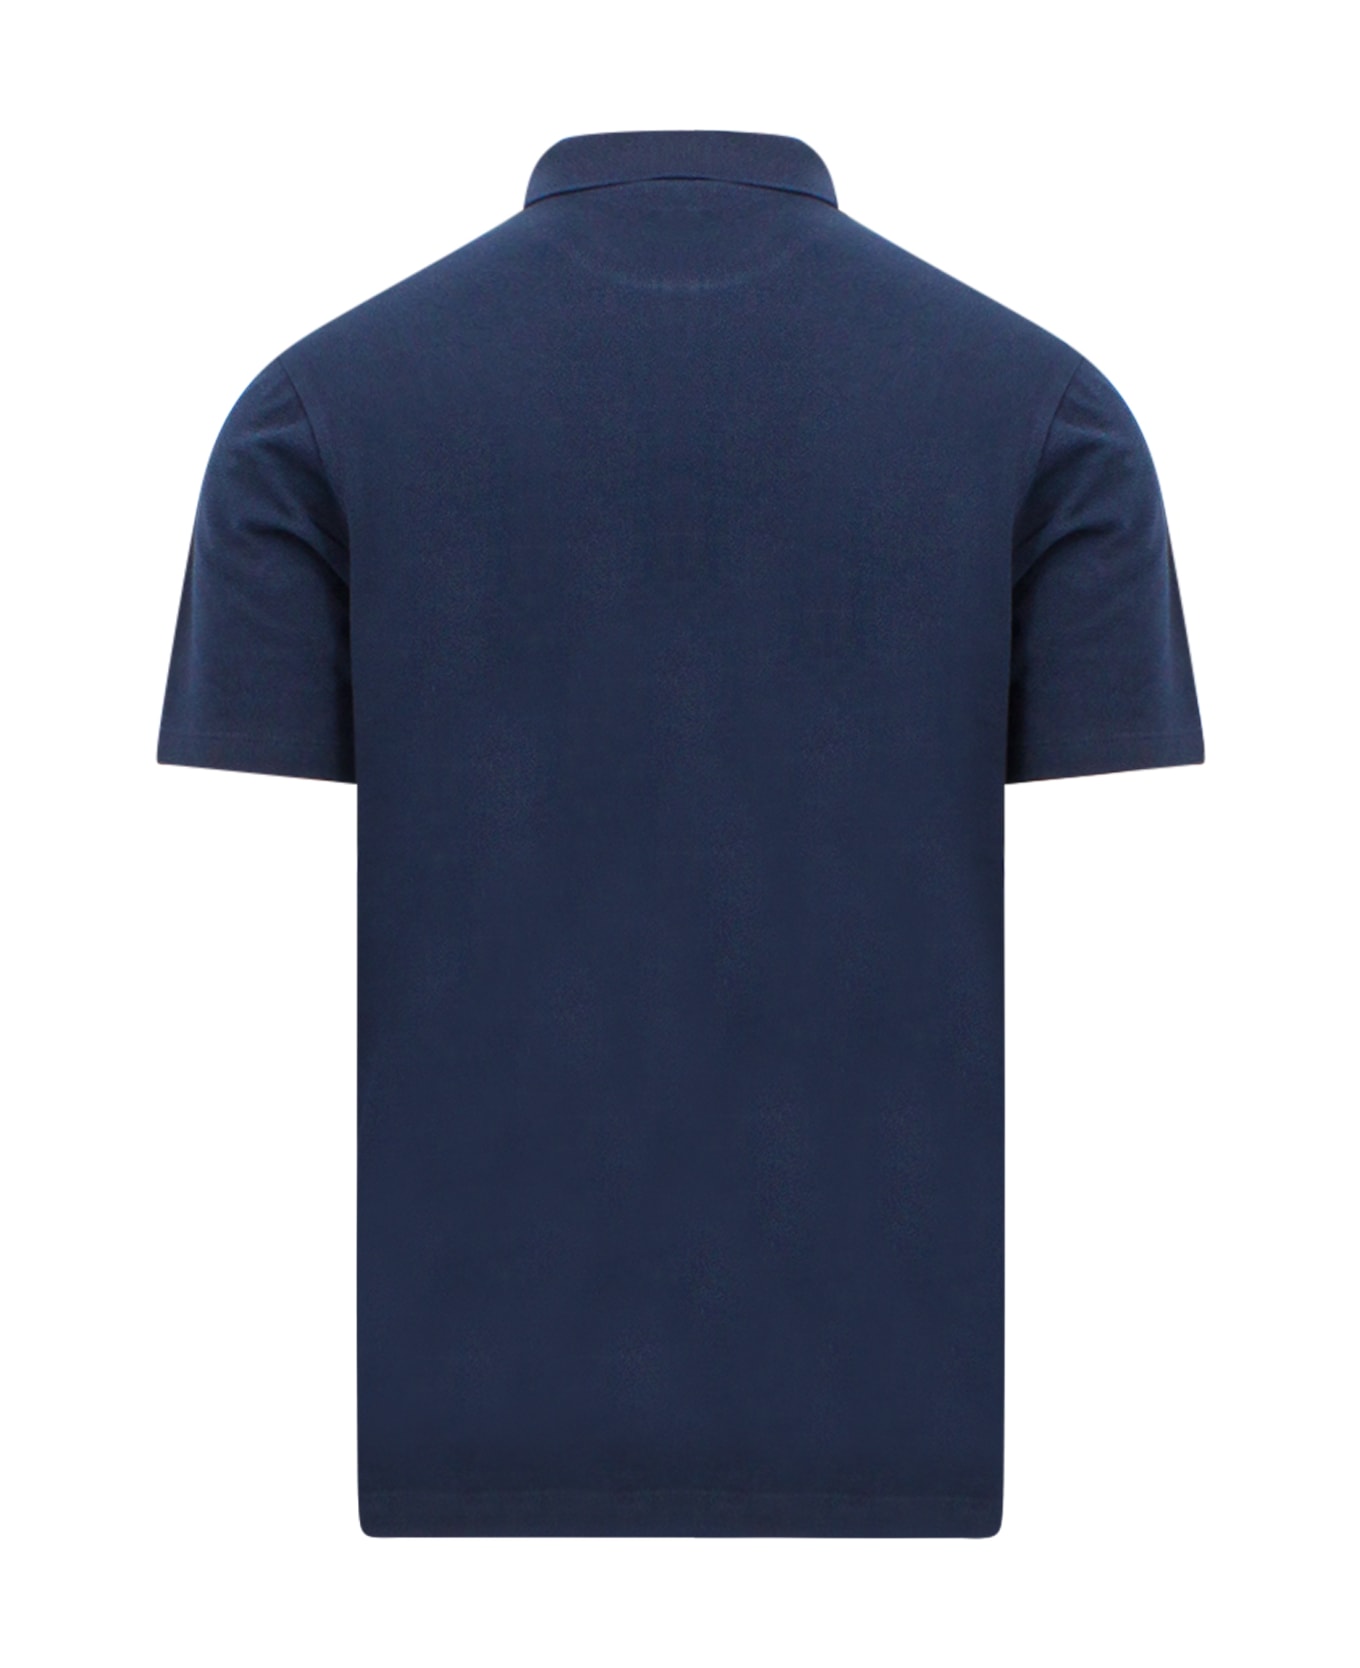 Paul&Shark Polo Shirt - BLUE ポロシャツ